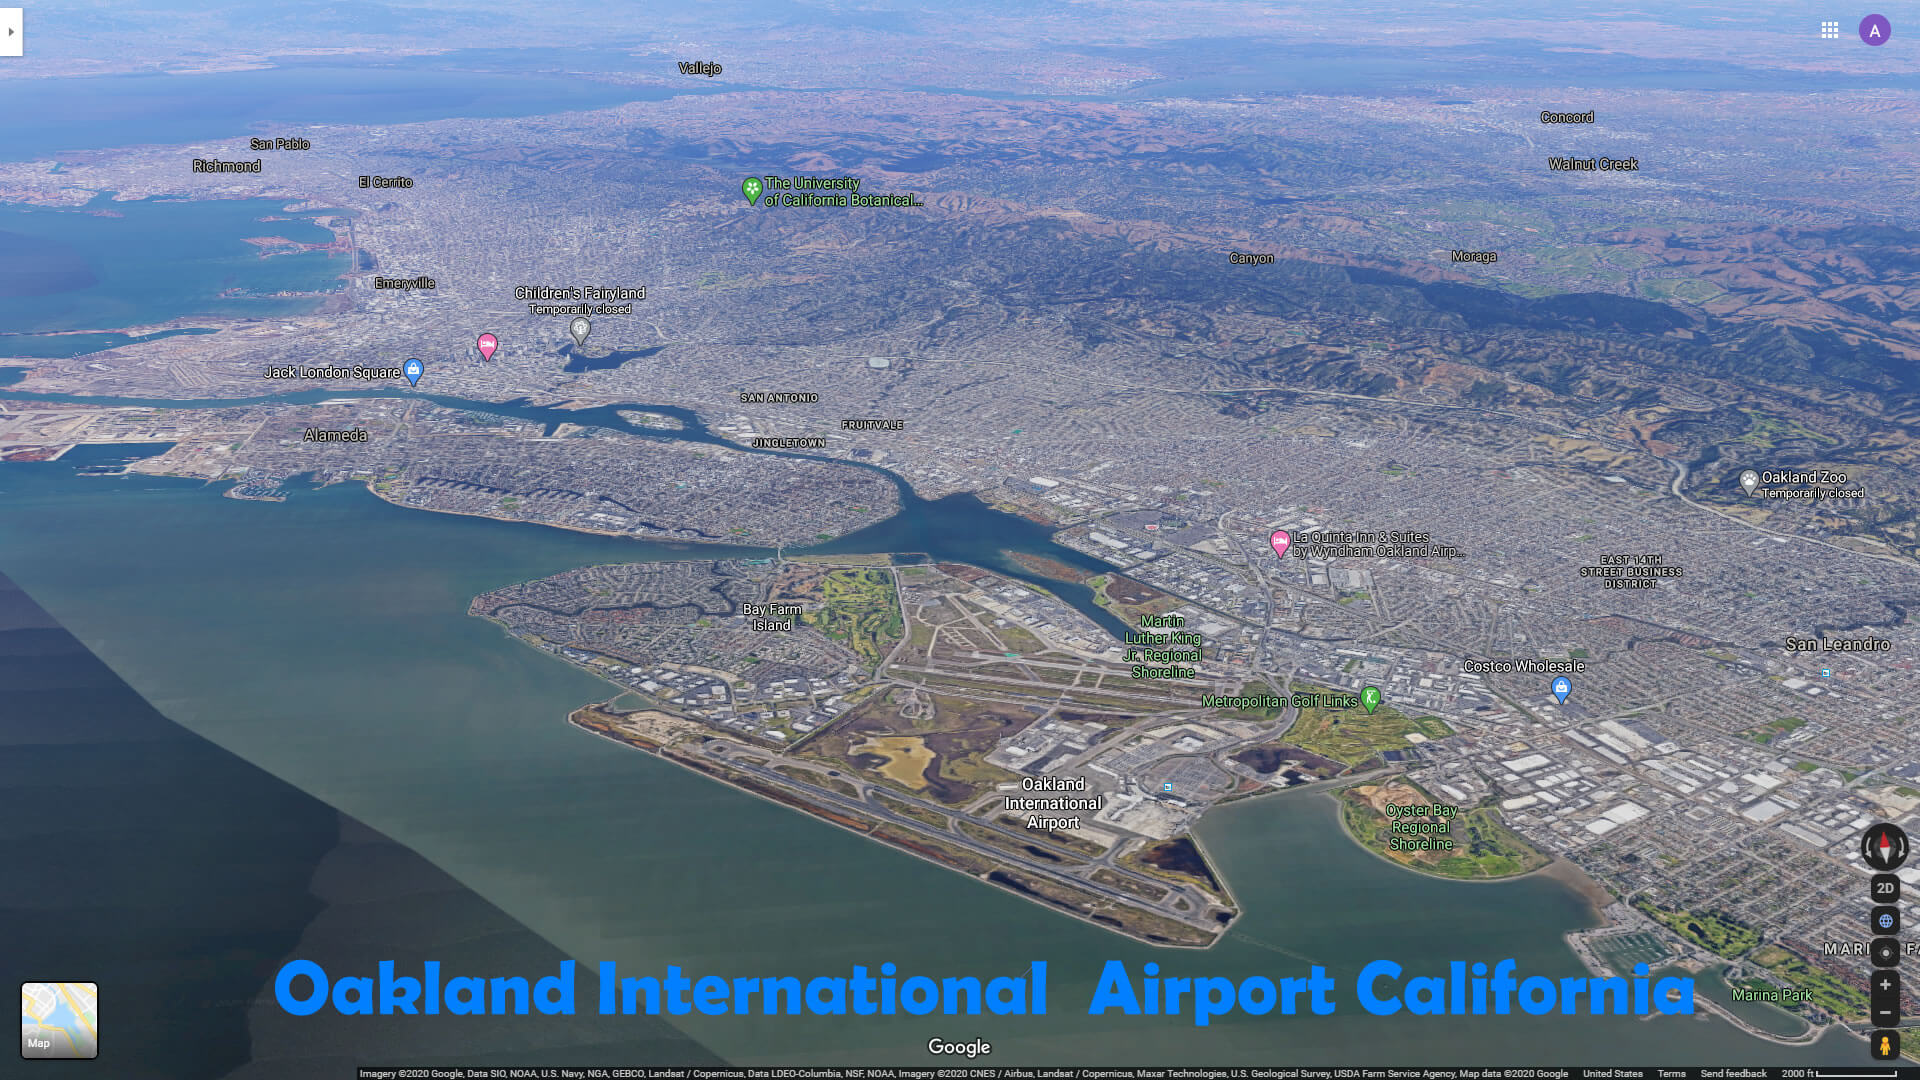 Oakland International Airport California